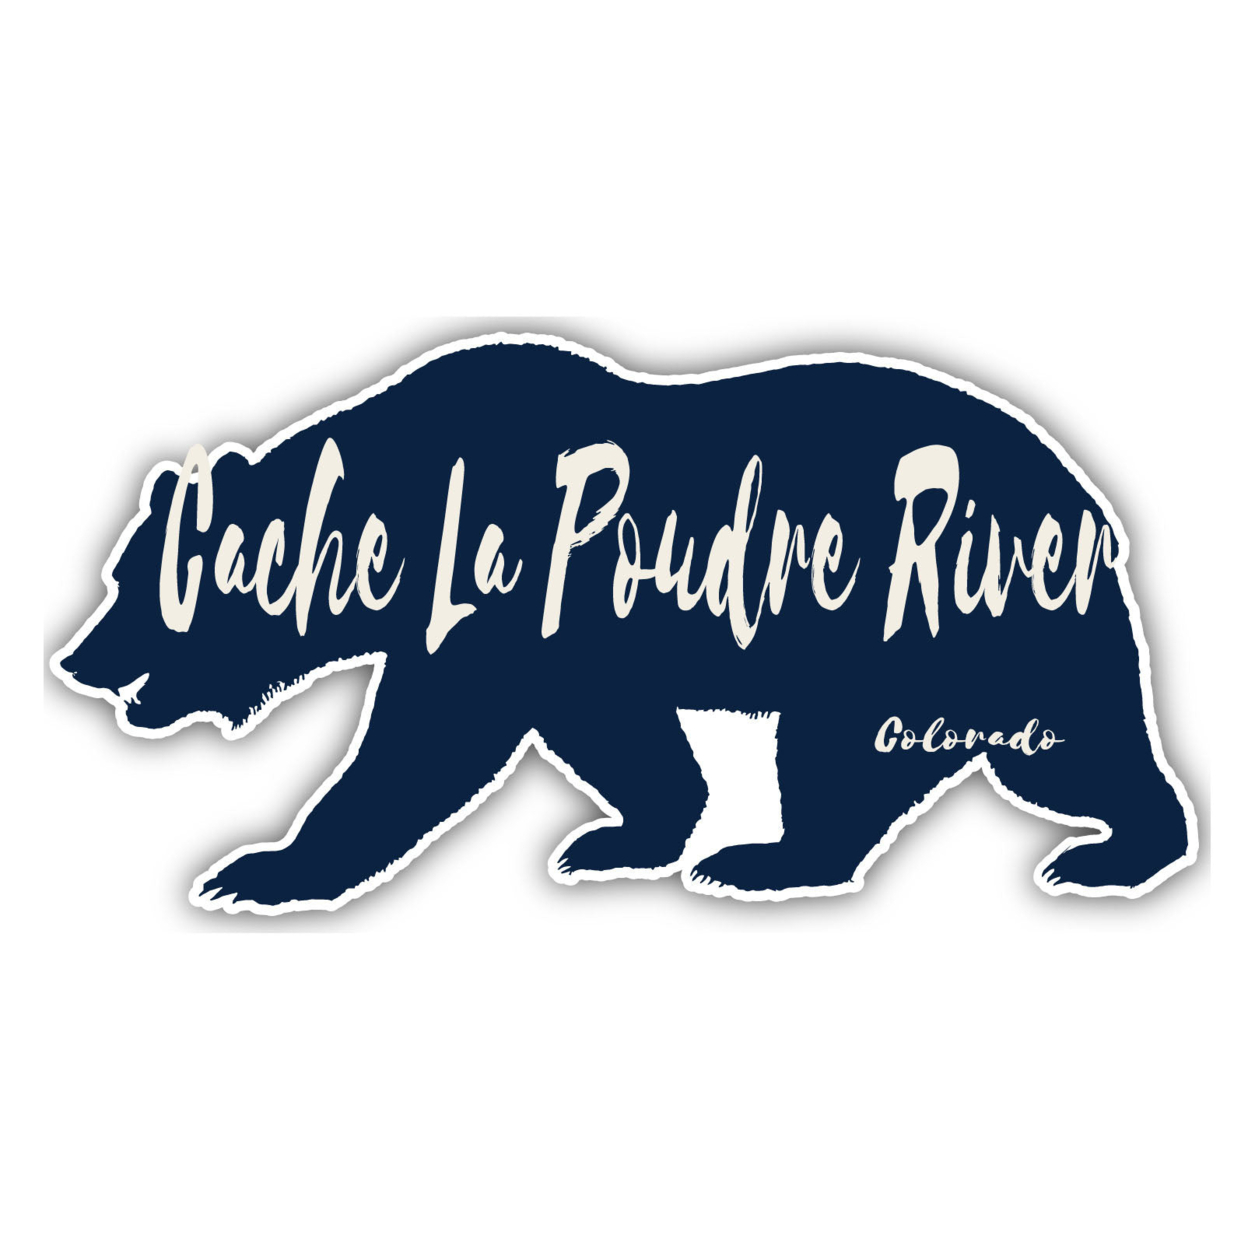 Cache La Poudre River Colorado Souvenir Decorative Stickers (Choose Theme And Size) - 4-Pack, 8-Inch, Bear